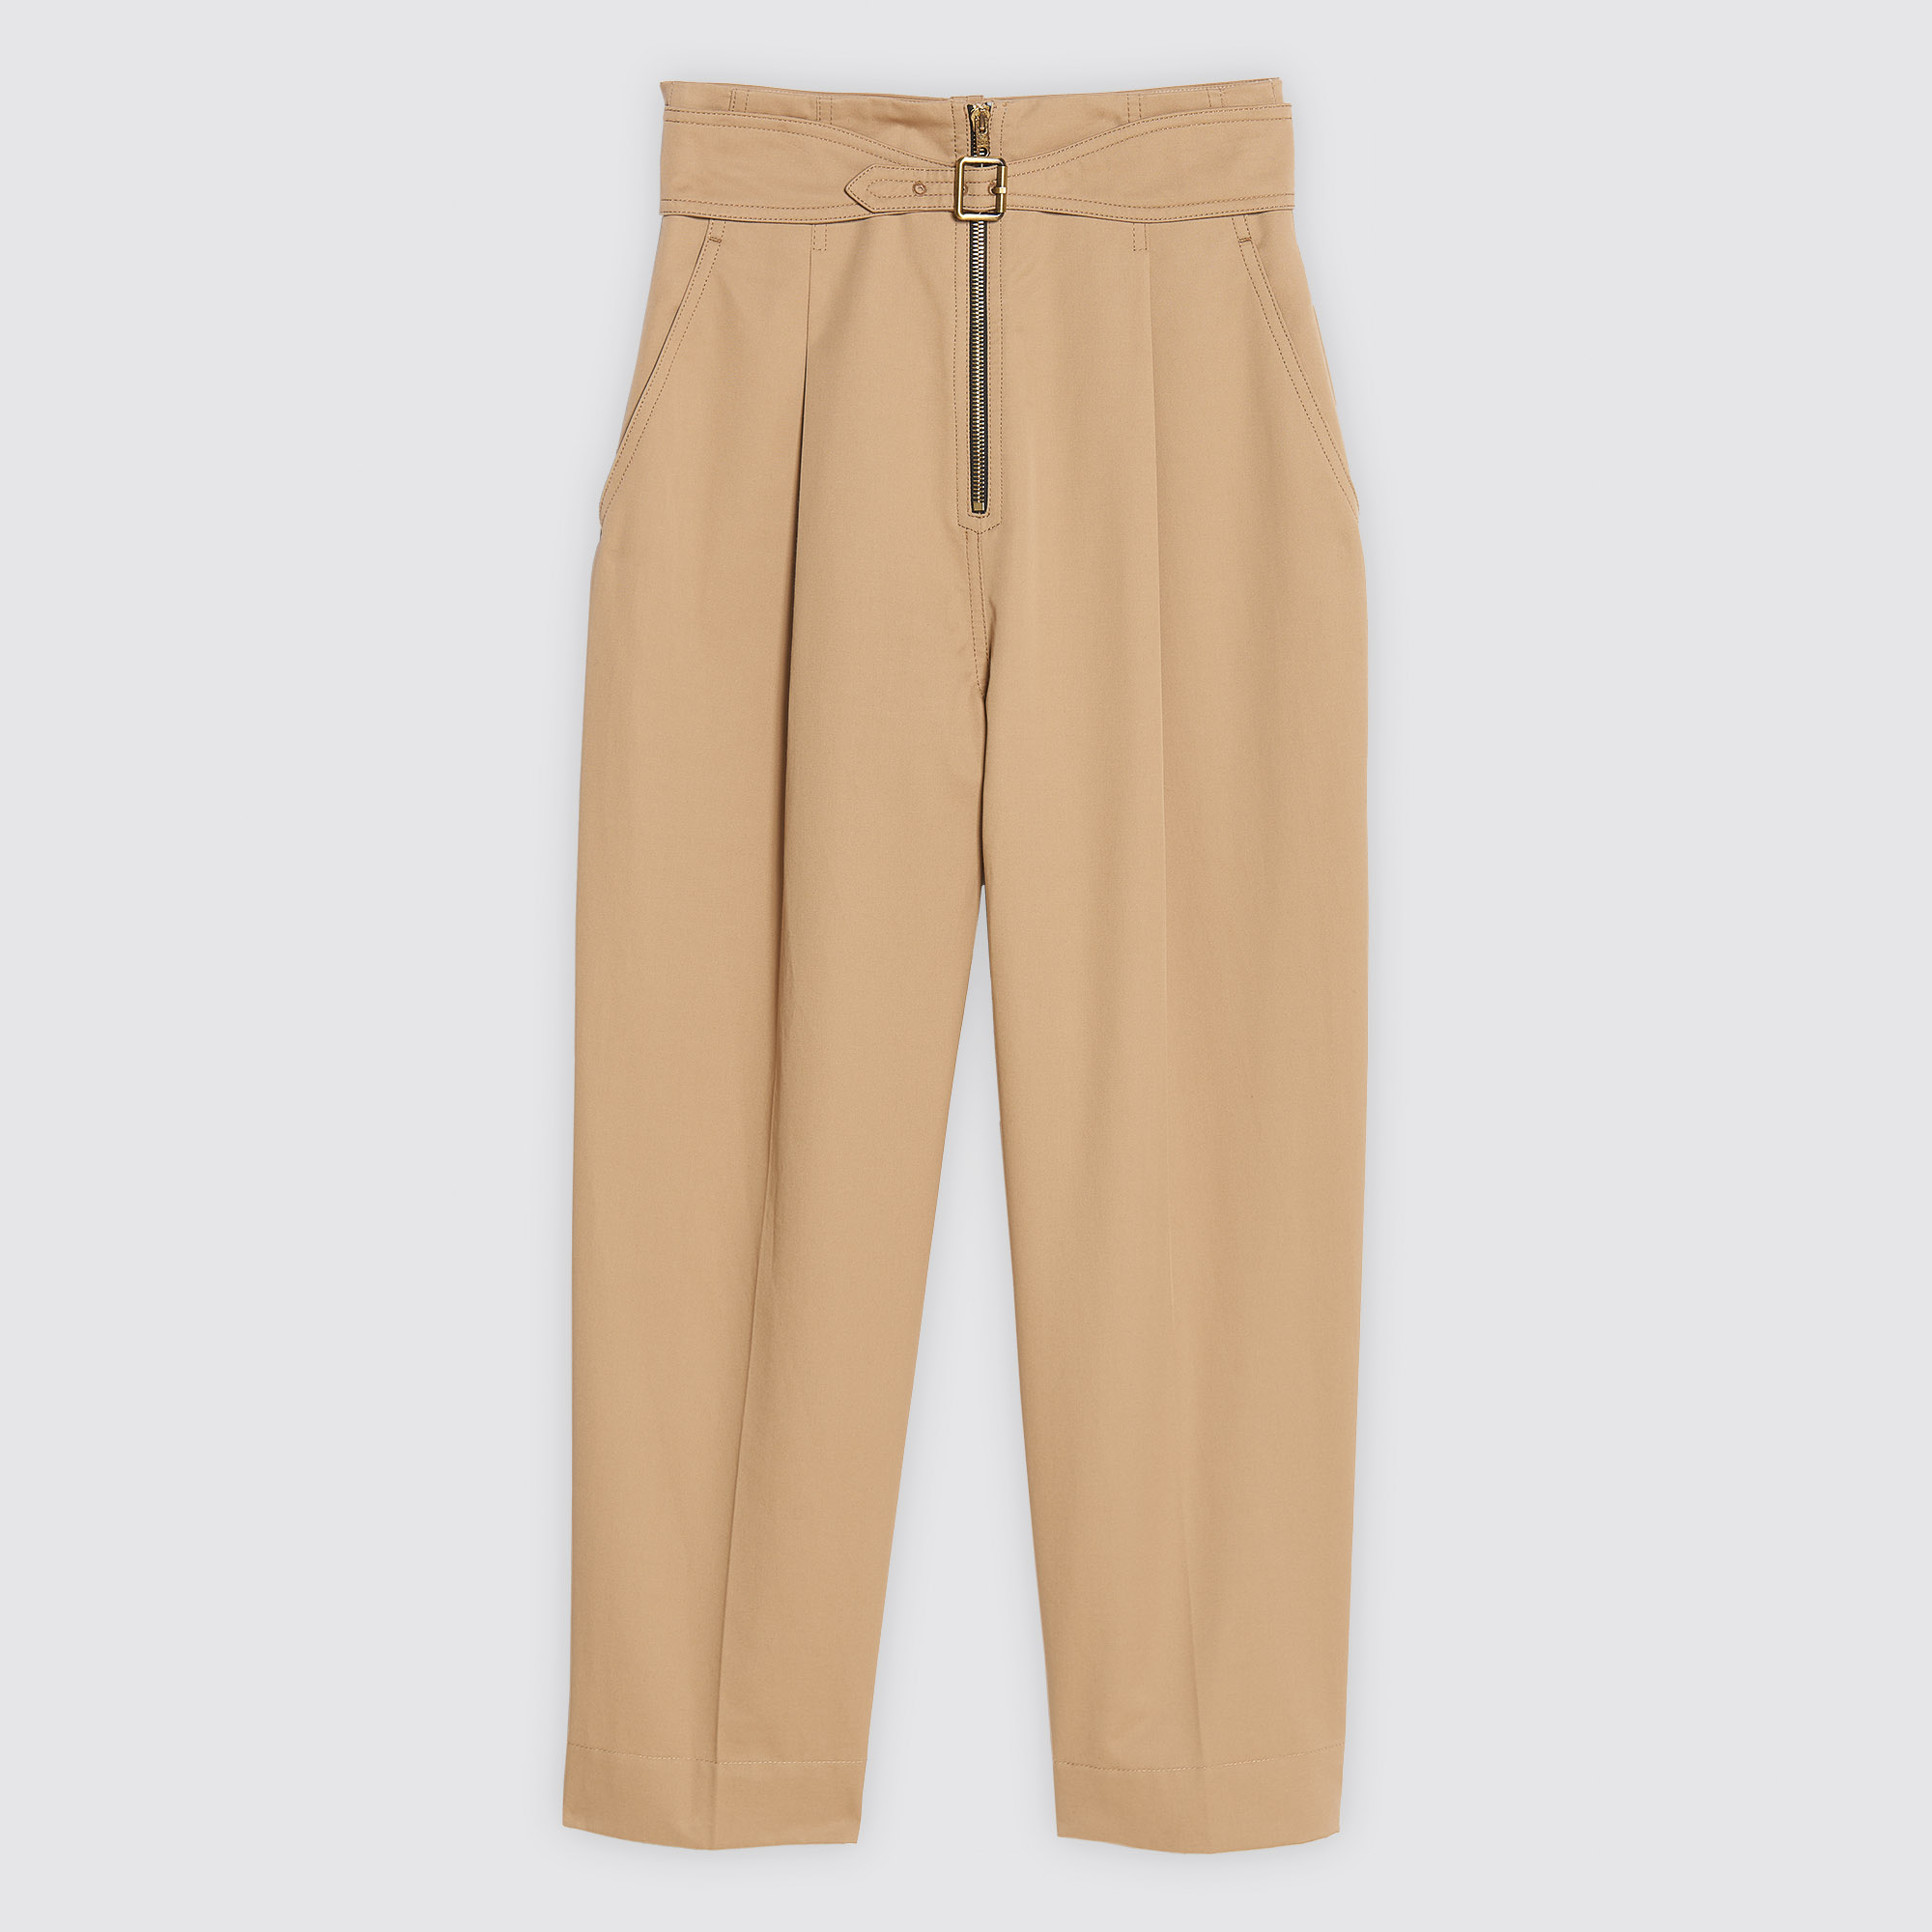 Zipped cotton trousers with belt : Pants & Shorts color Beige